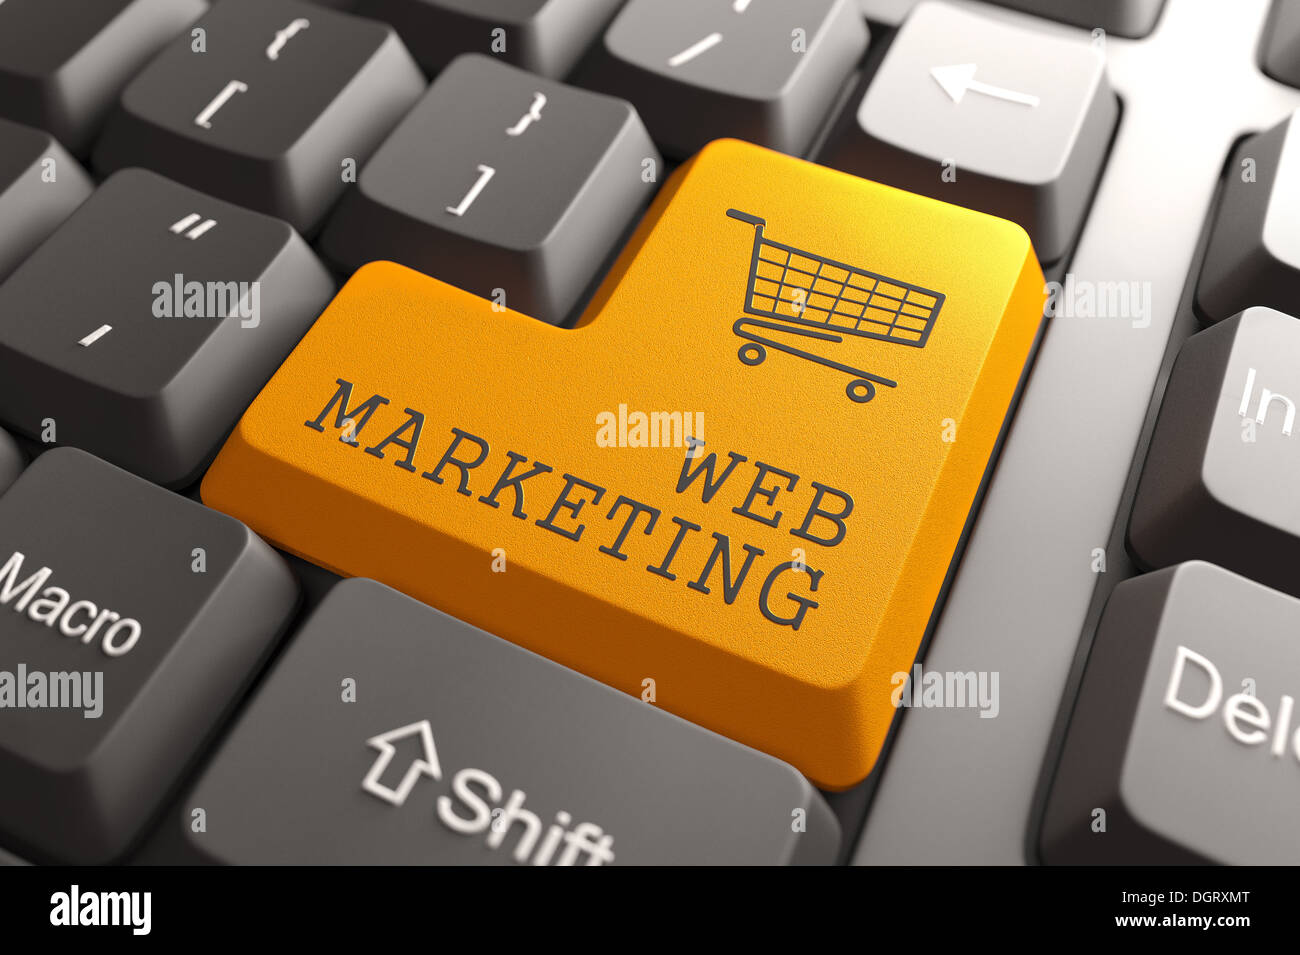 Web Marketing Button. Stock Photo